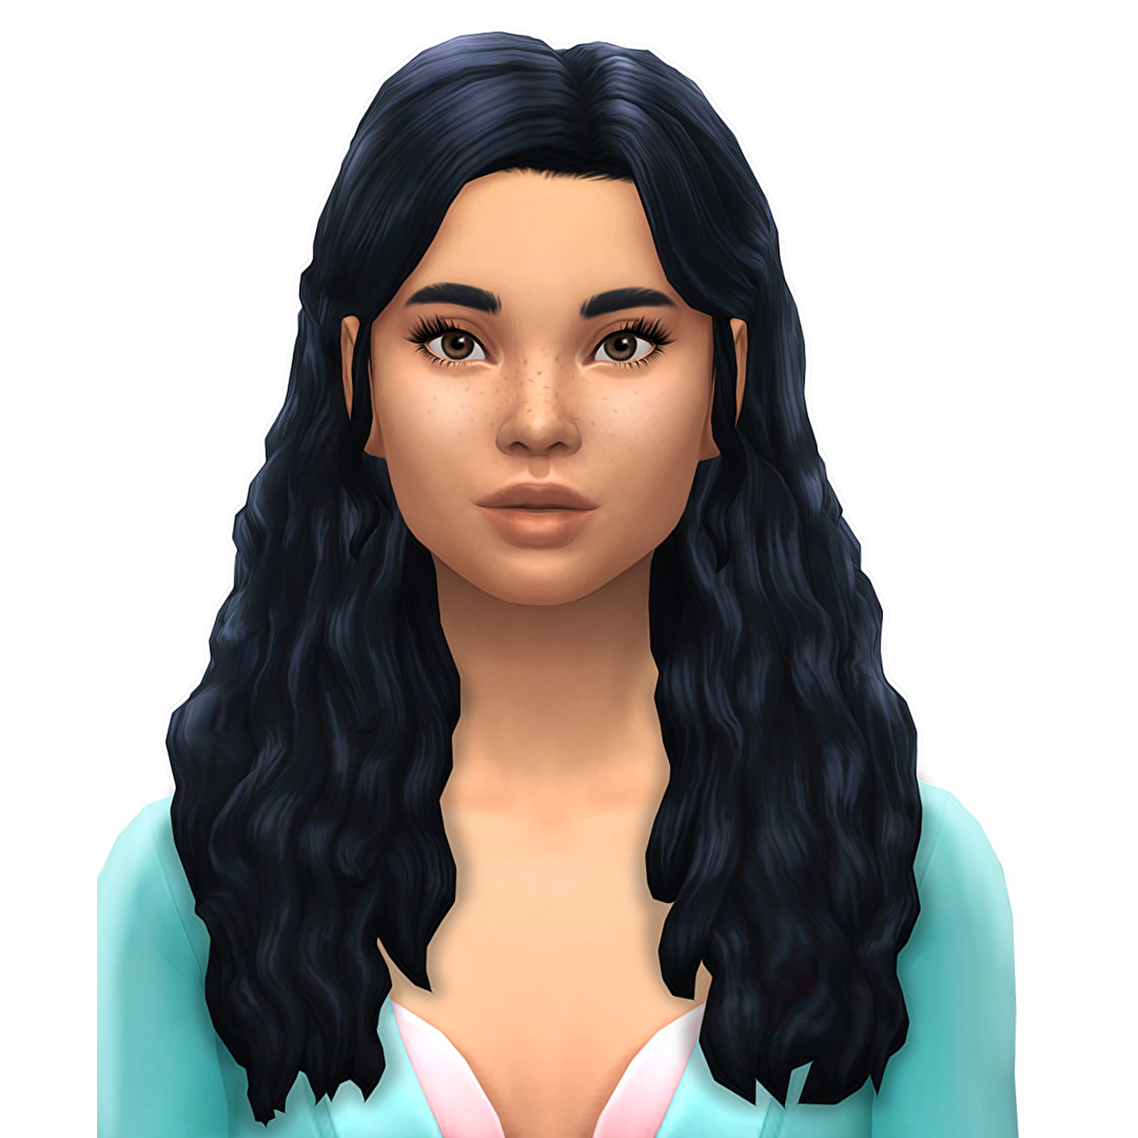 Nalani Hair - The Sims 4 Create a Sim - CurseForge